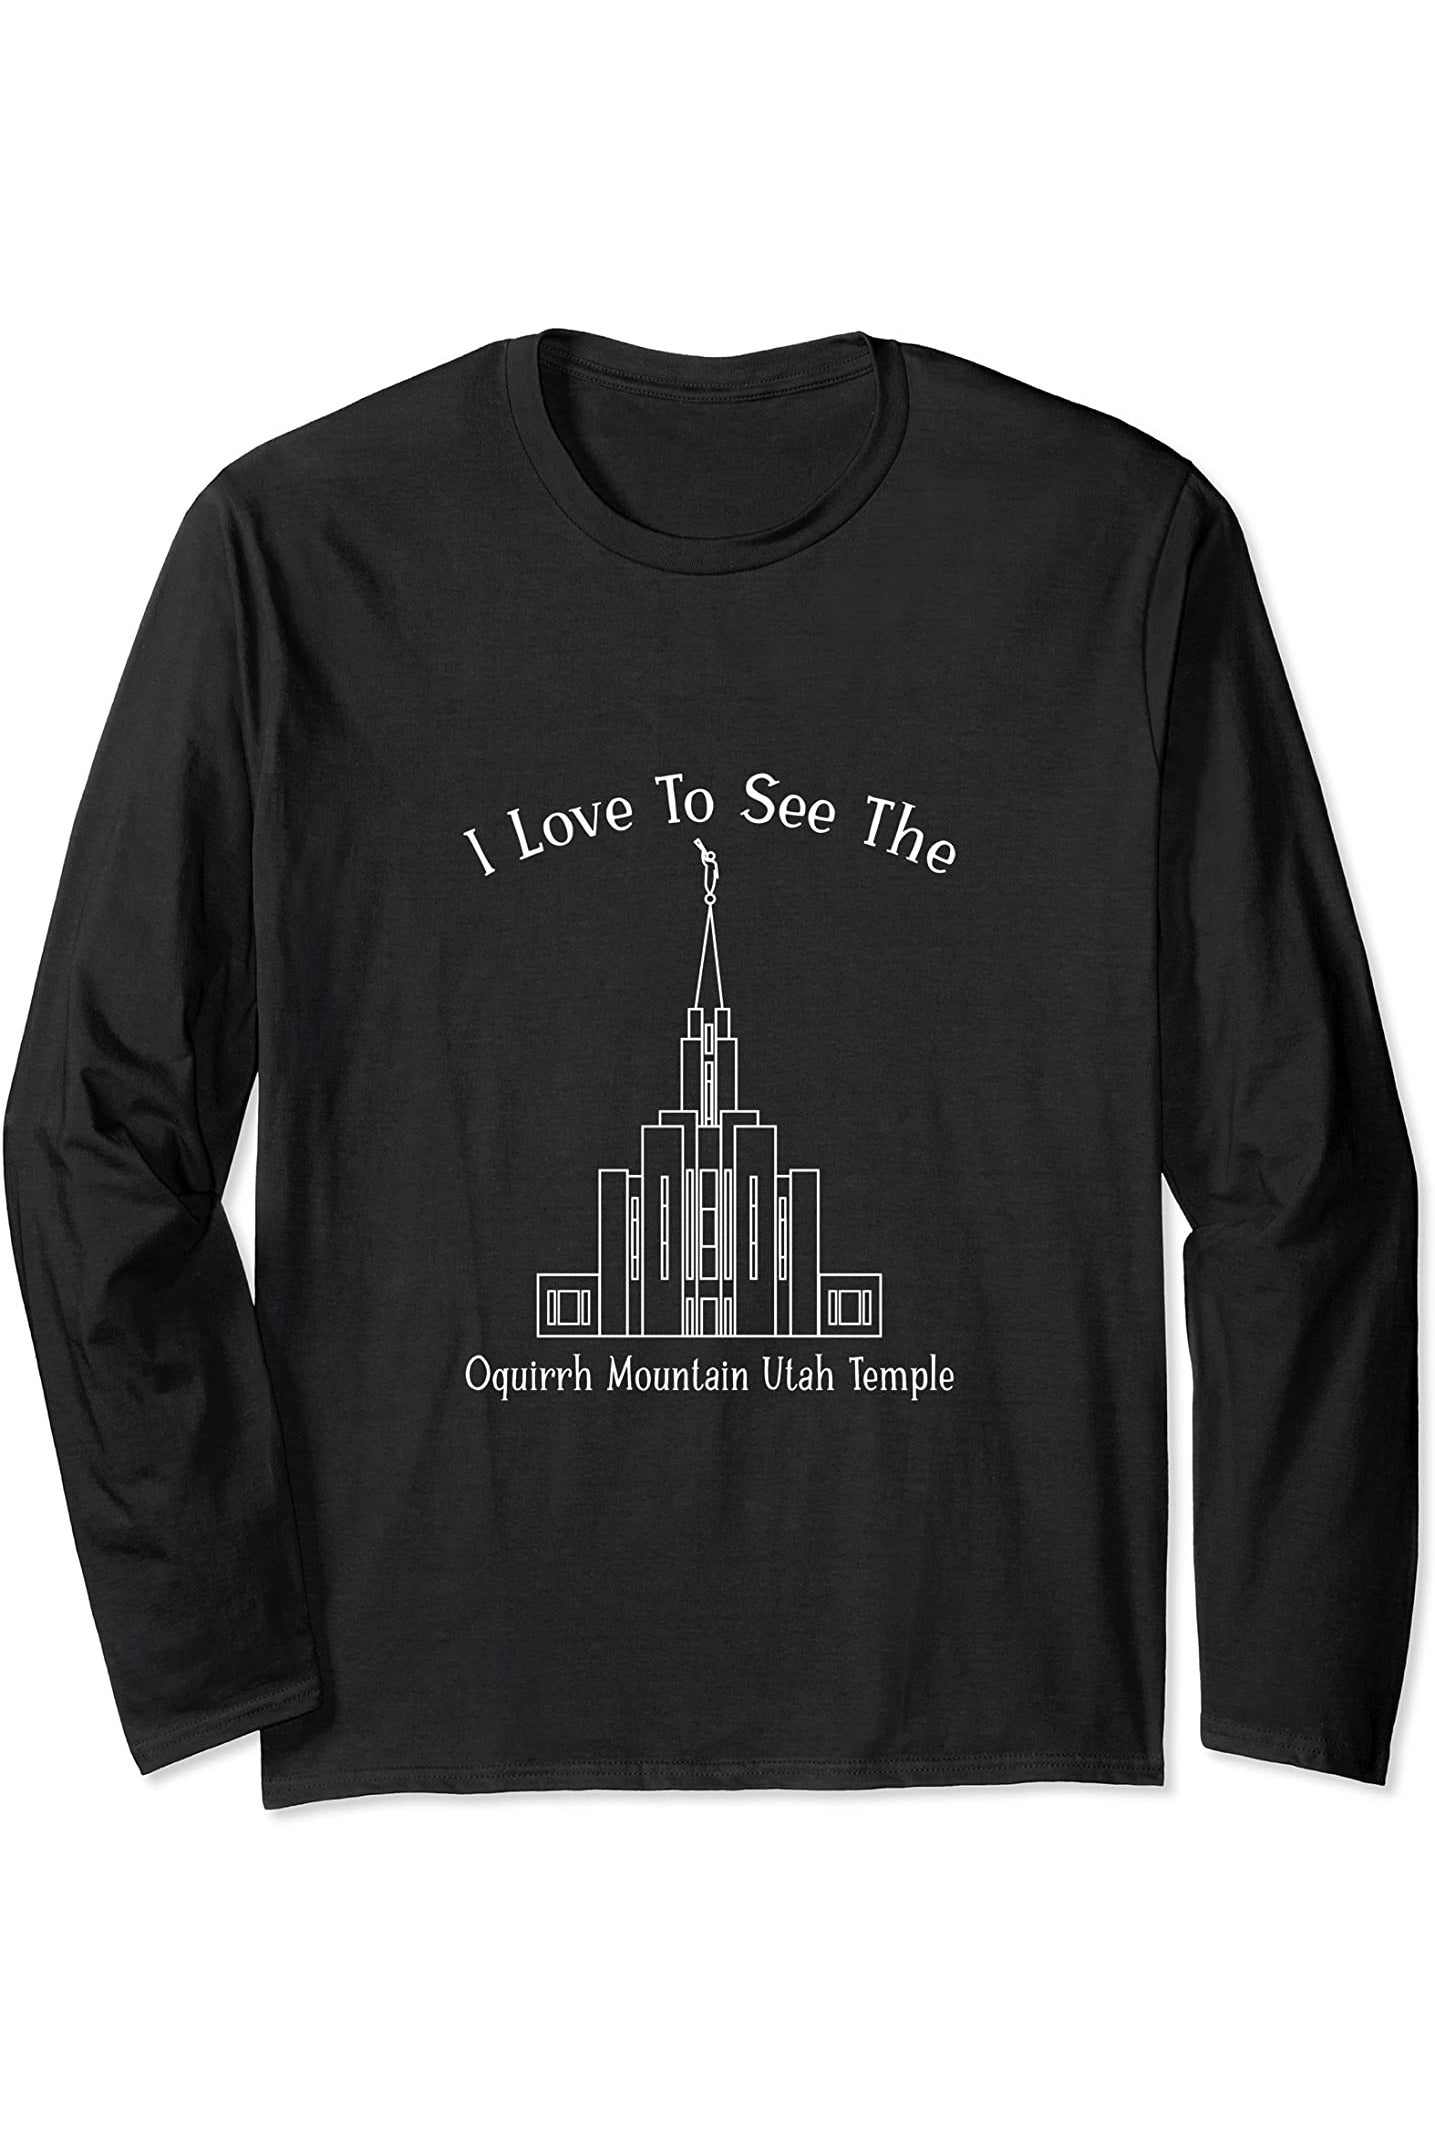 Oquirrh Mountain Utah Temple Long Sleeve T-Shirt - Happy Style (English) US